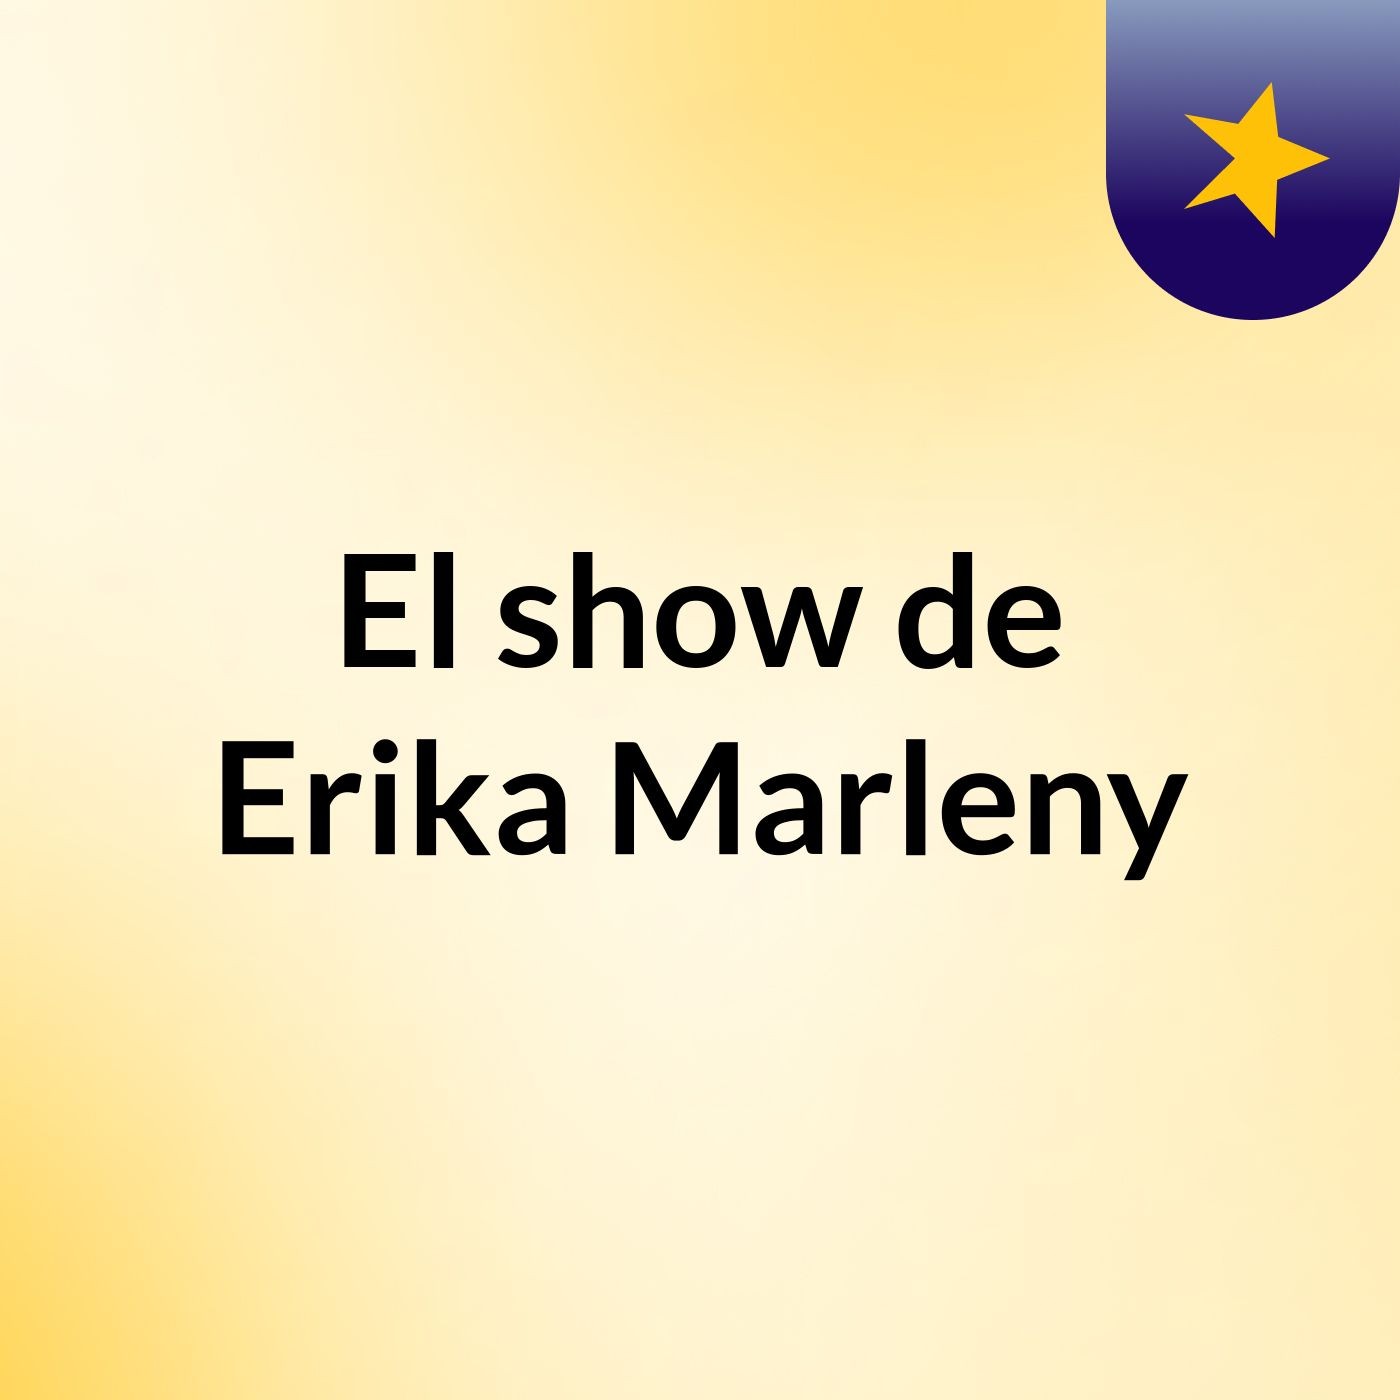 El show de Erika Marleny